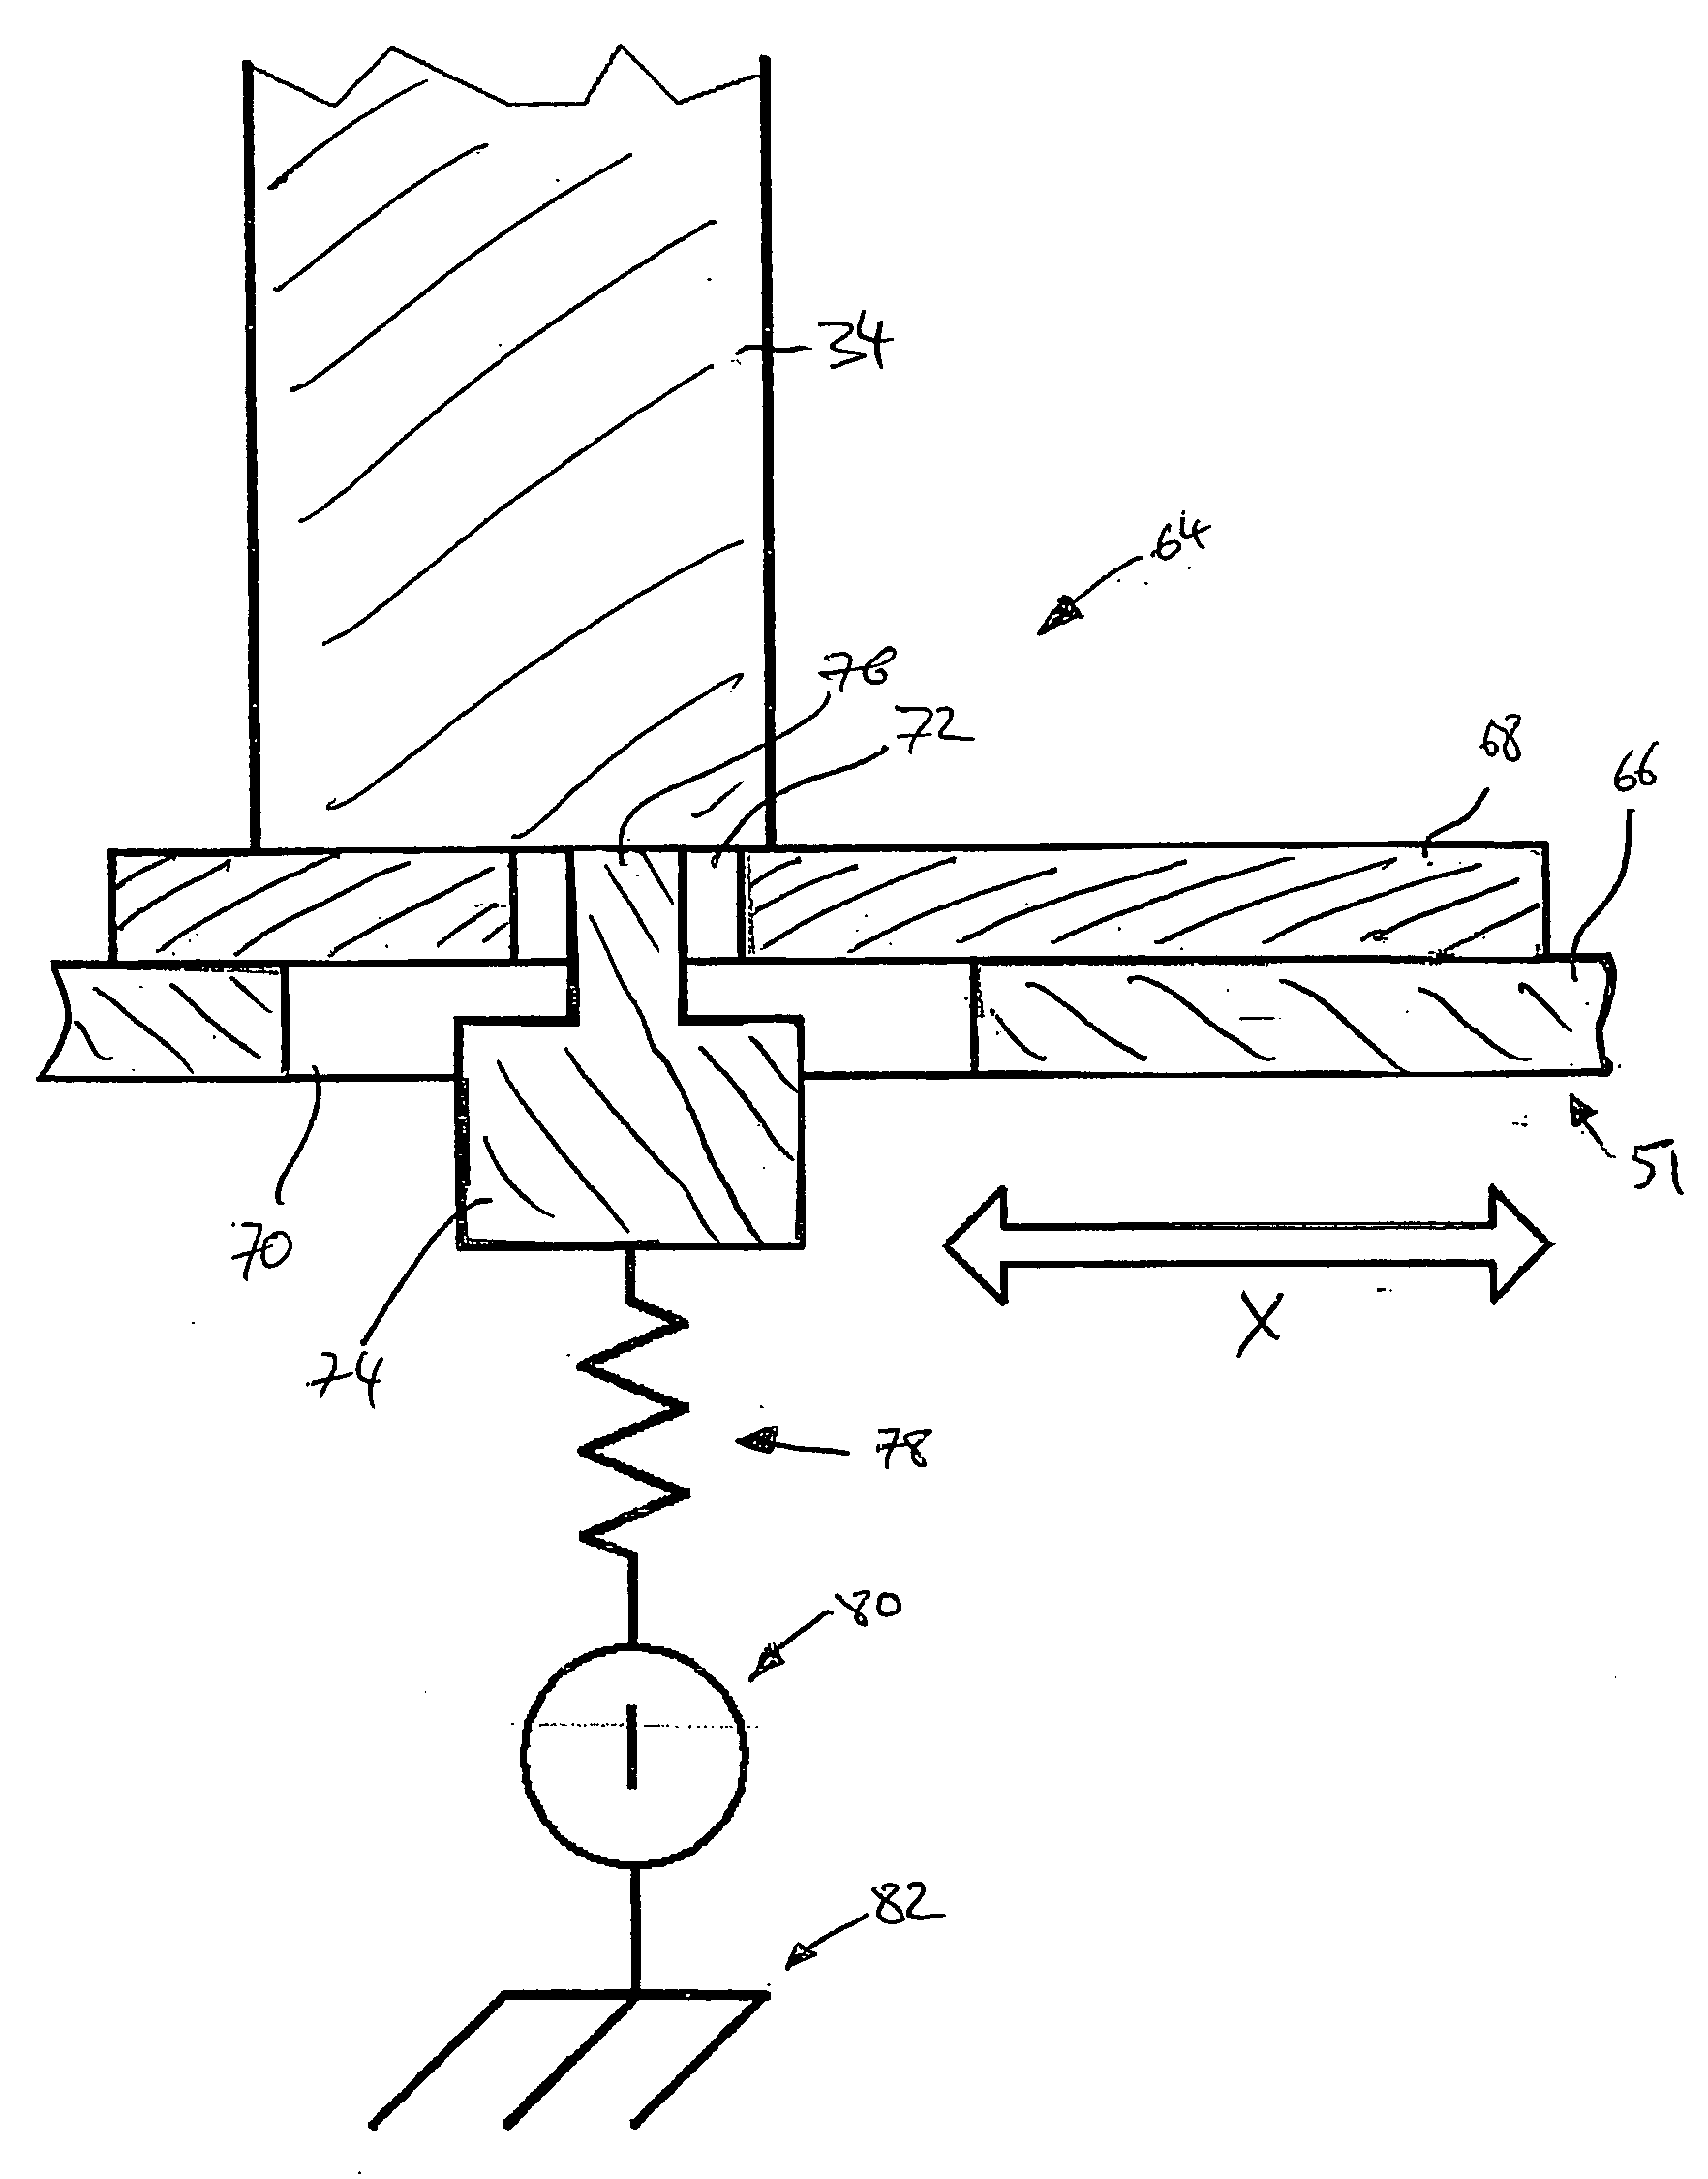 Ion beam monitoring arrangement